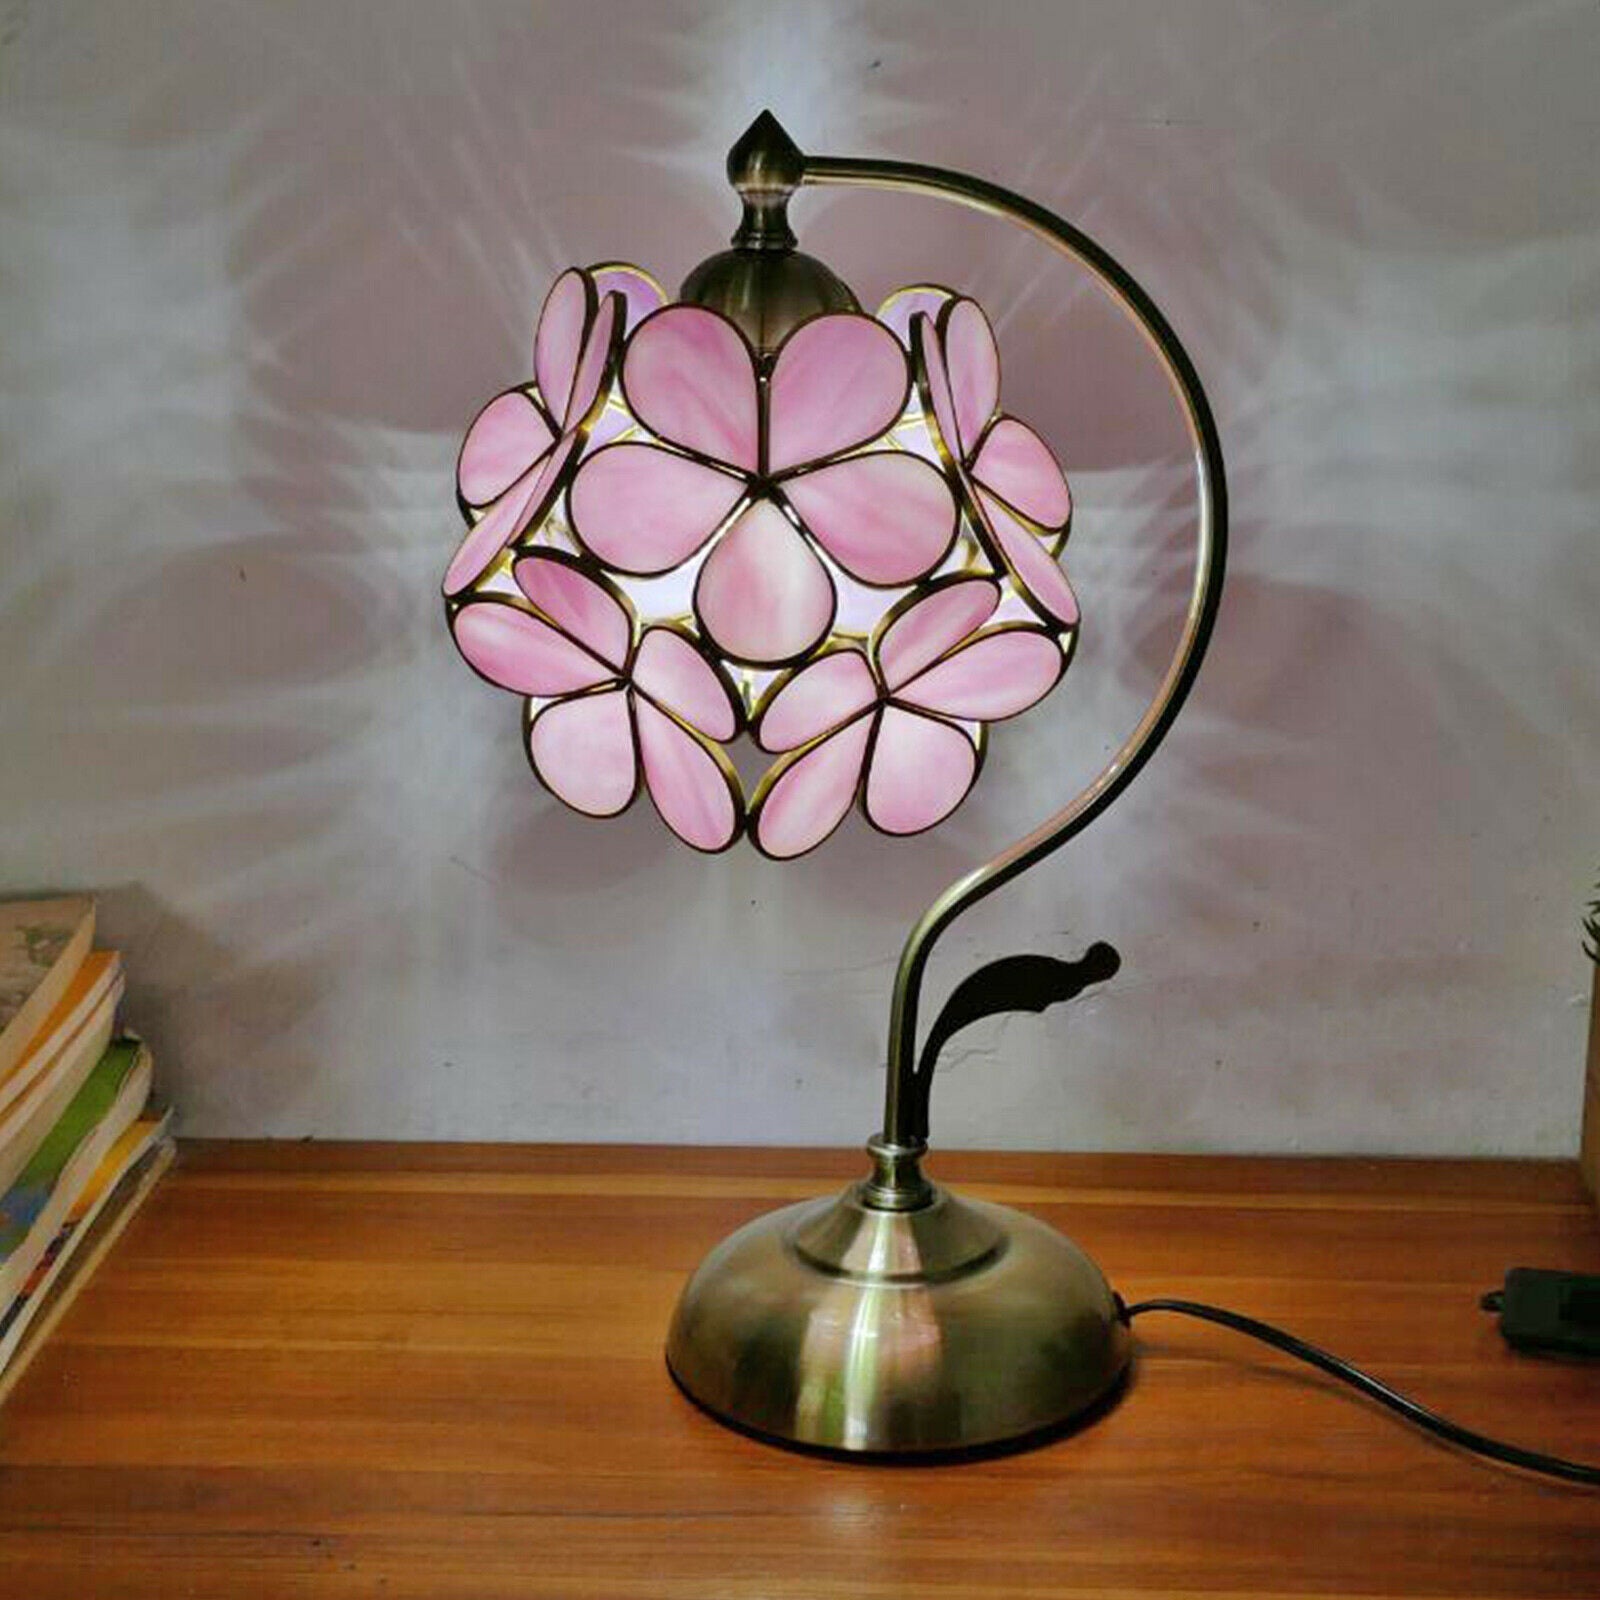 Fichiouy Retro Desk Lamp Stained Glass Petal Table Light Reading Lamp Bedside Light for Bedroom E27